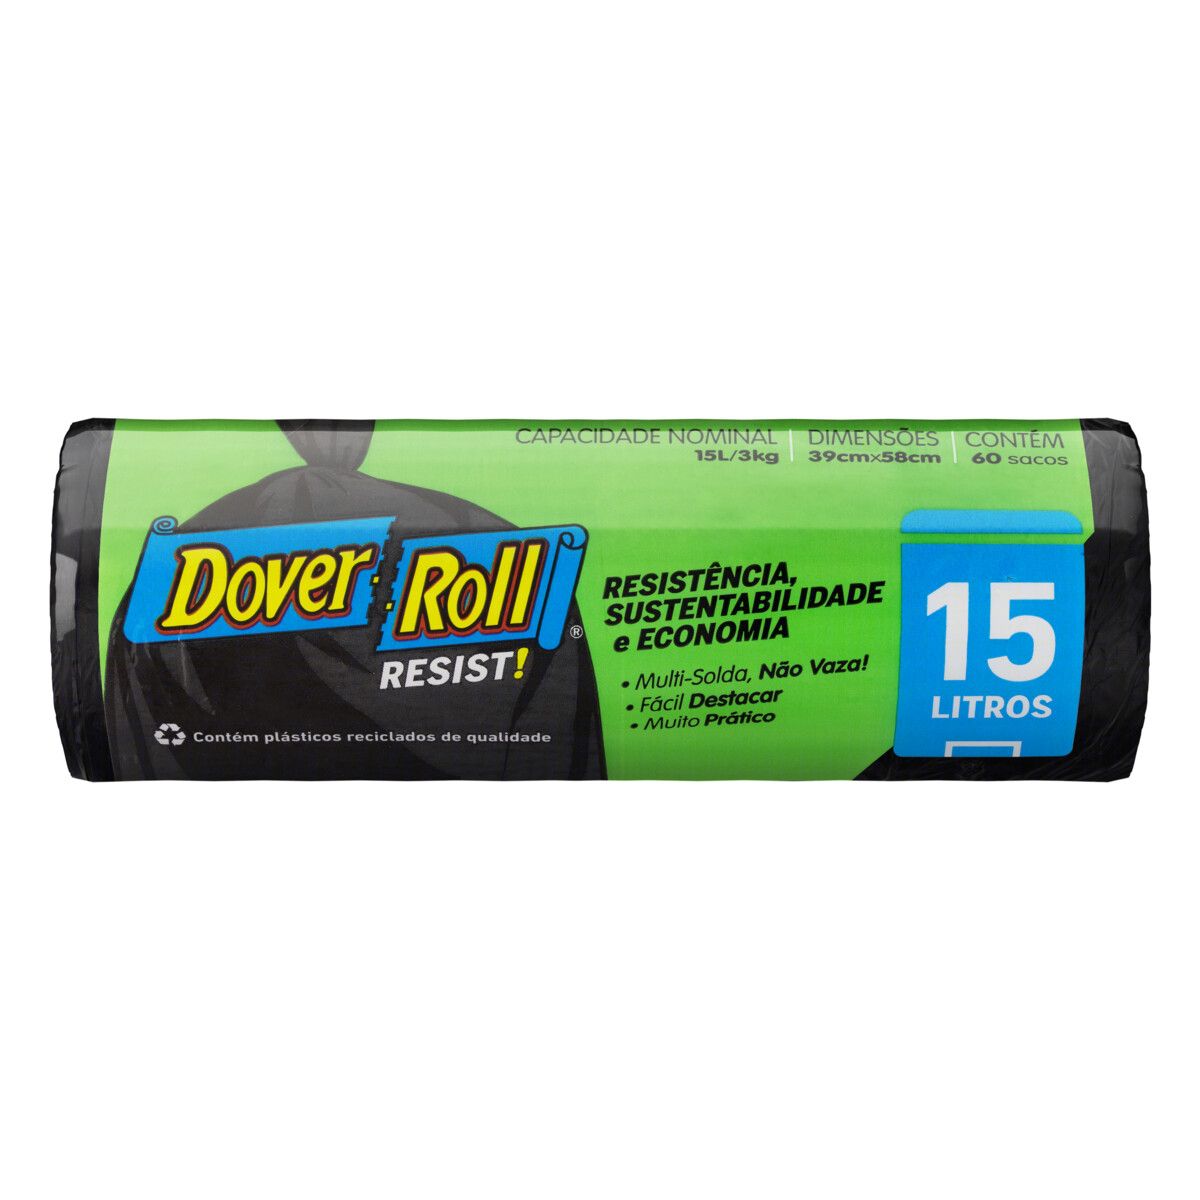 Saco para Lixo Dover Roll 15L Resist 60 Unidades image number 0